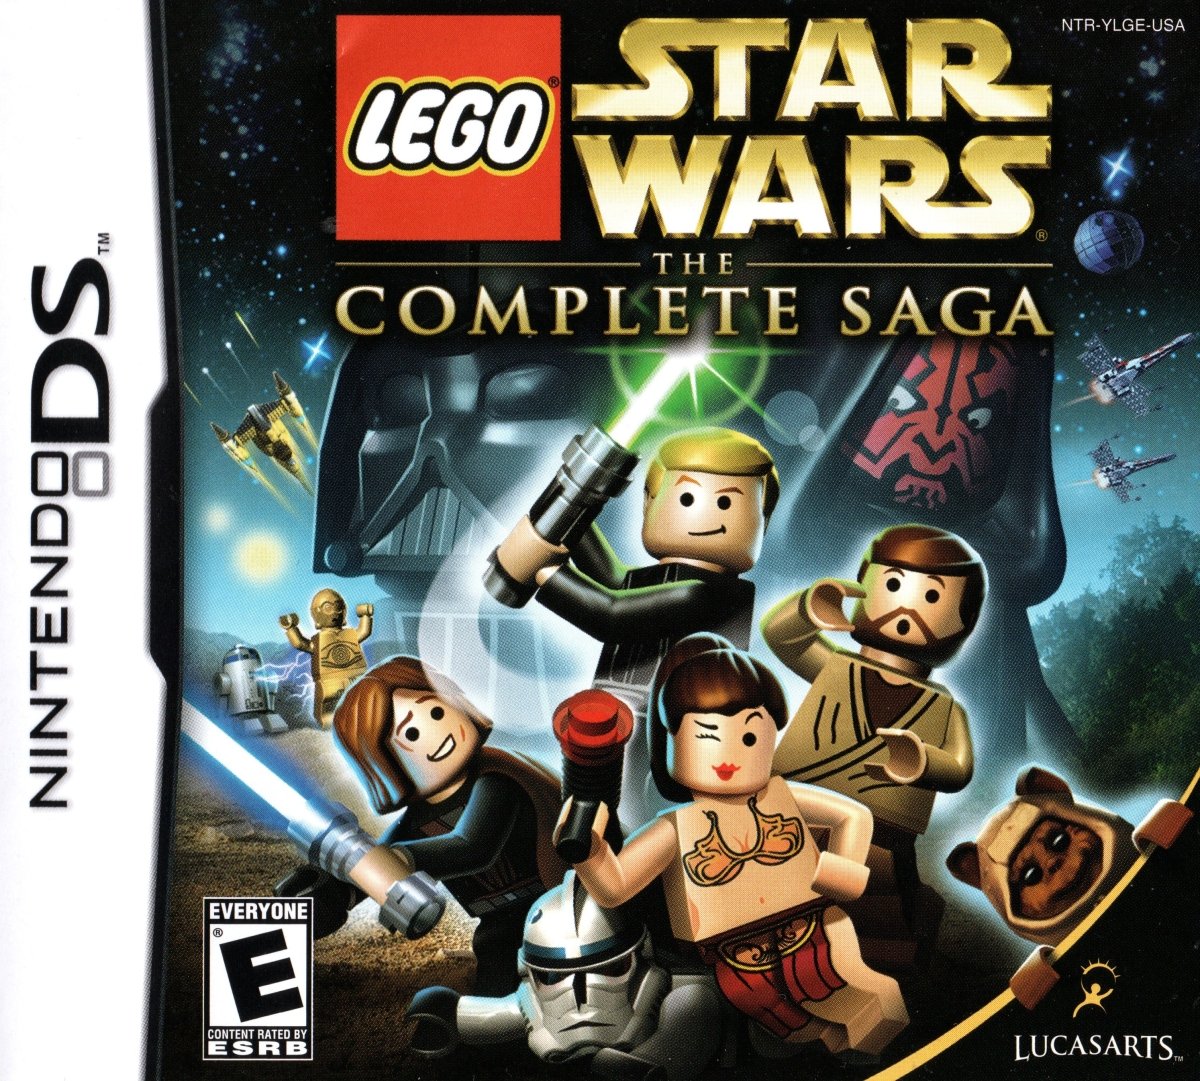 LEGO Star Wars Complete Saga - Nintendo DS - Retro Island Gaming